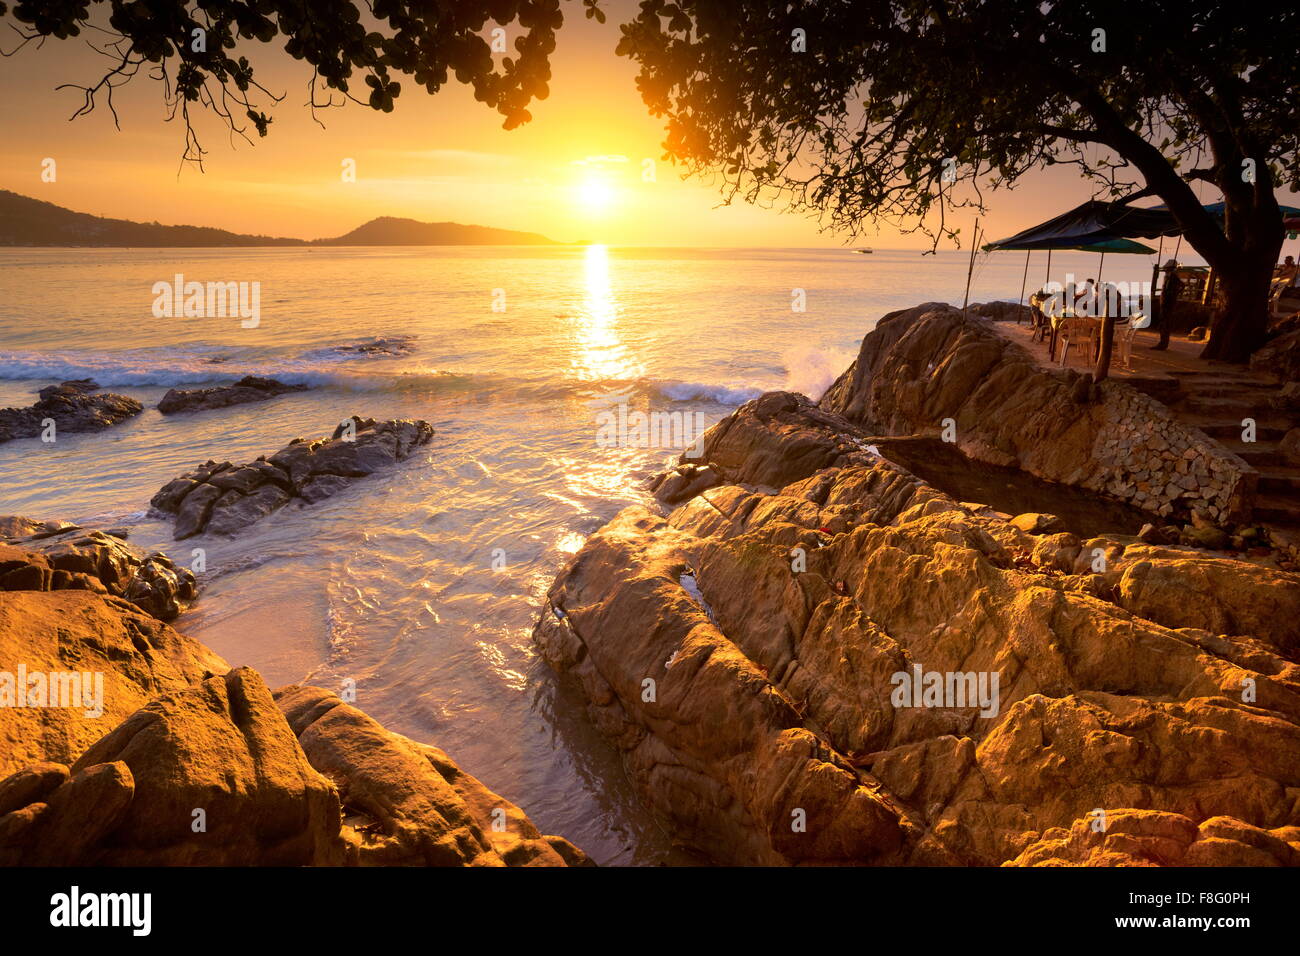 Thailand - Phuket Island, Patong Beach, sunset time scenery Stock Photo